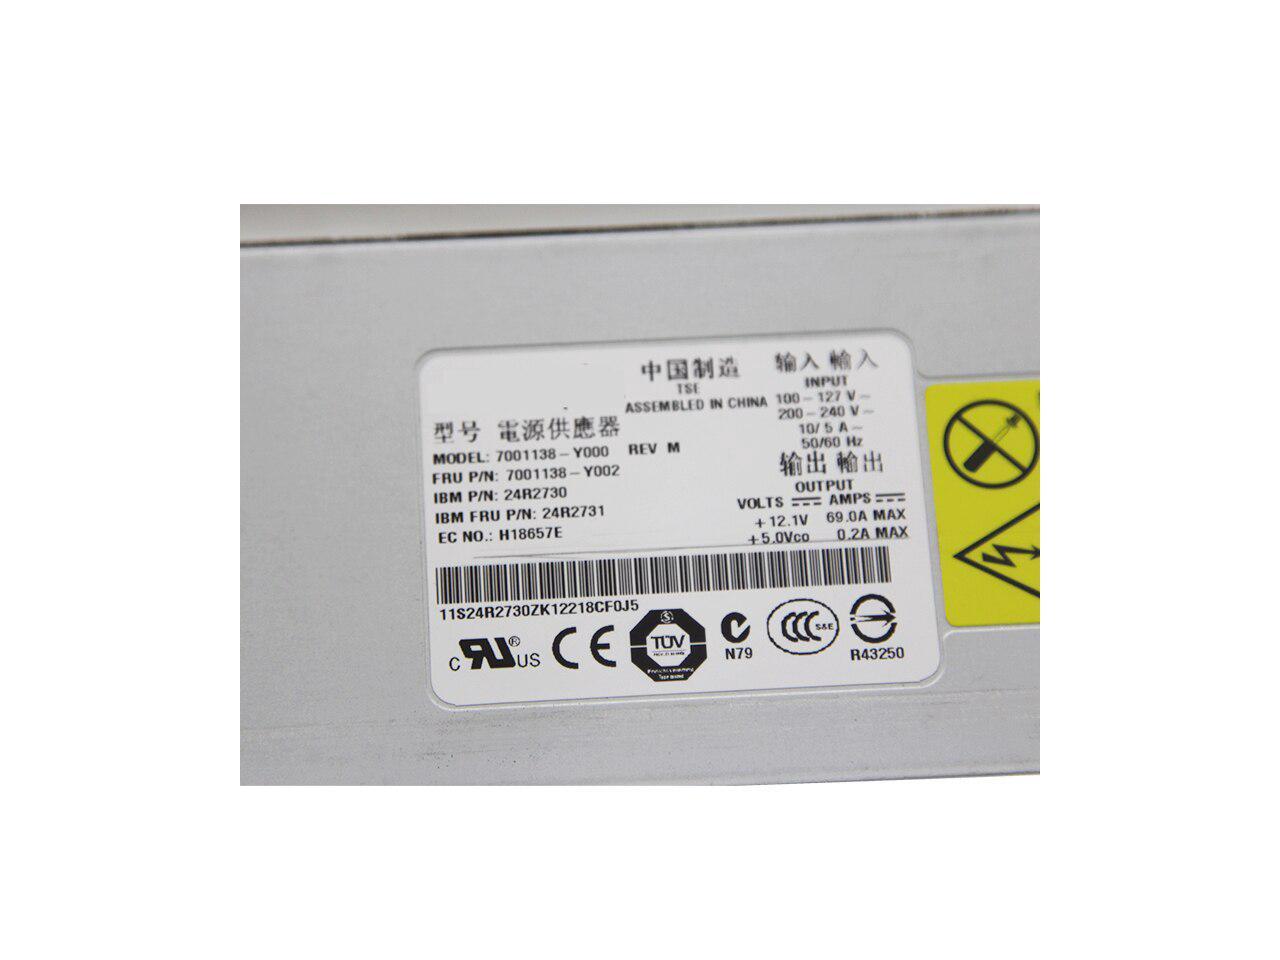 Server Power Supply for X3400 X3500 X3650 X3655 24R2730 24R2731